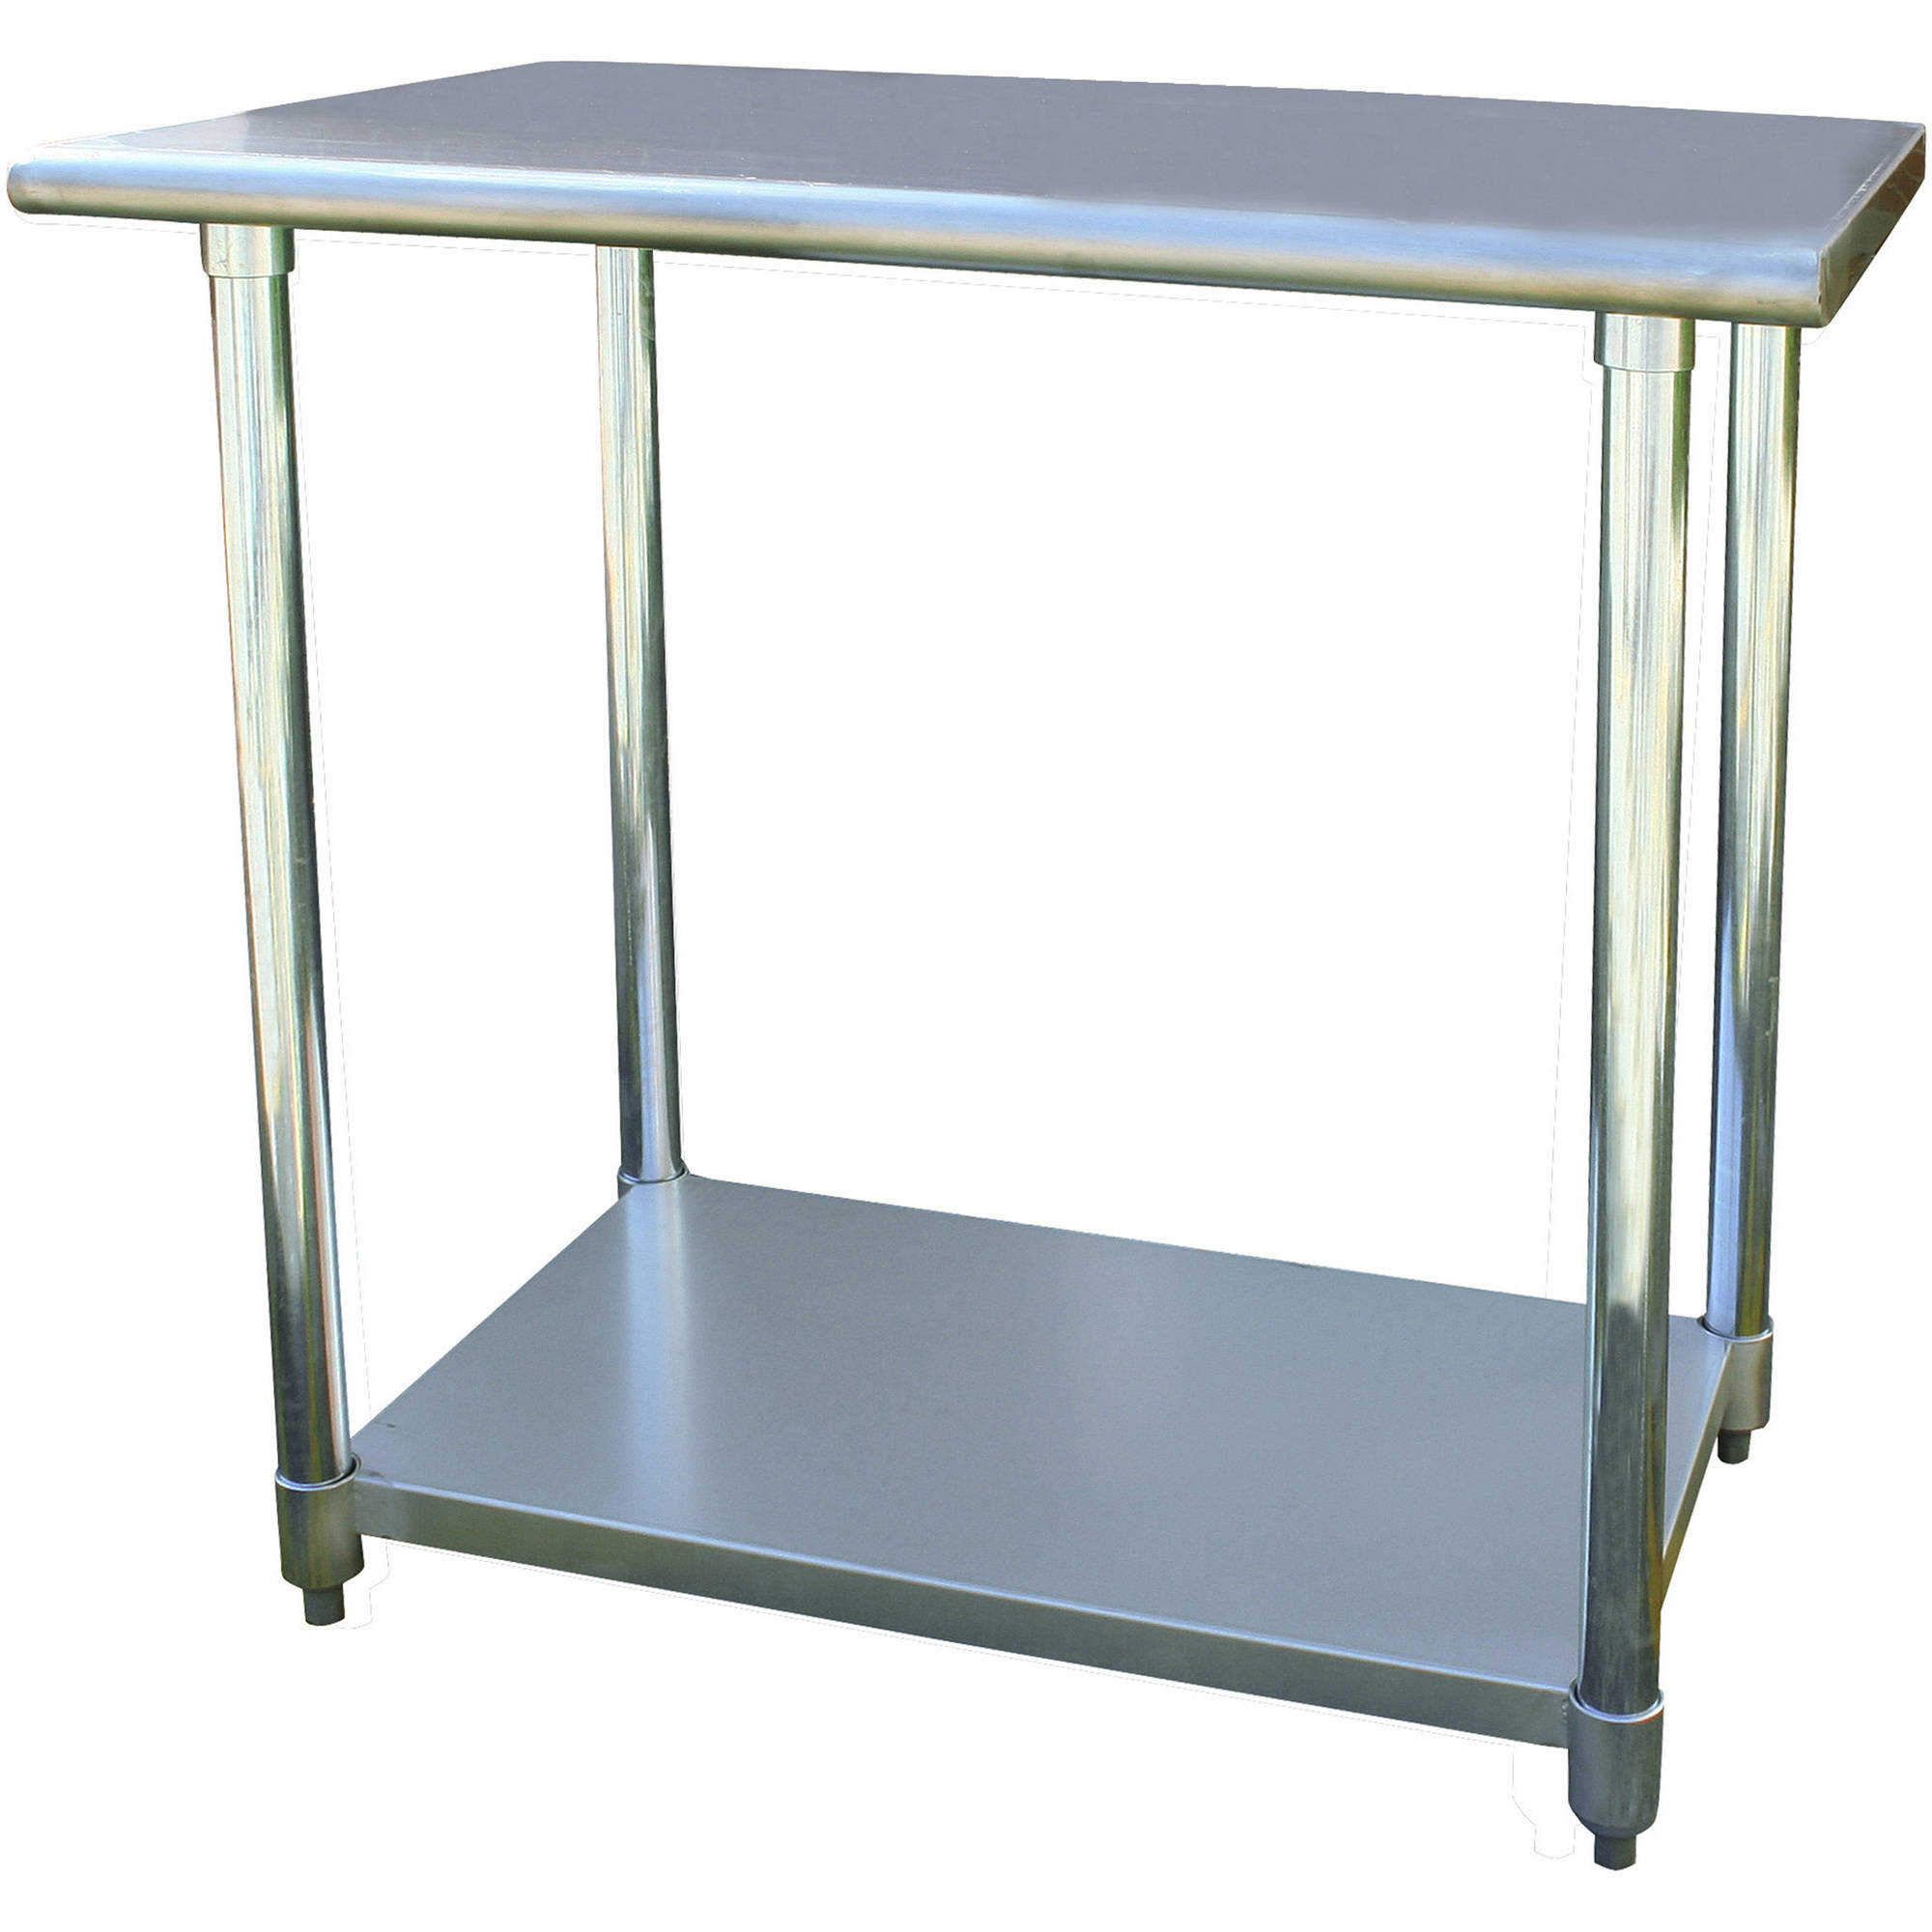 Sportsman Series Stainless Steel Work Table, 24' x 36'